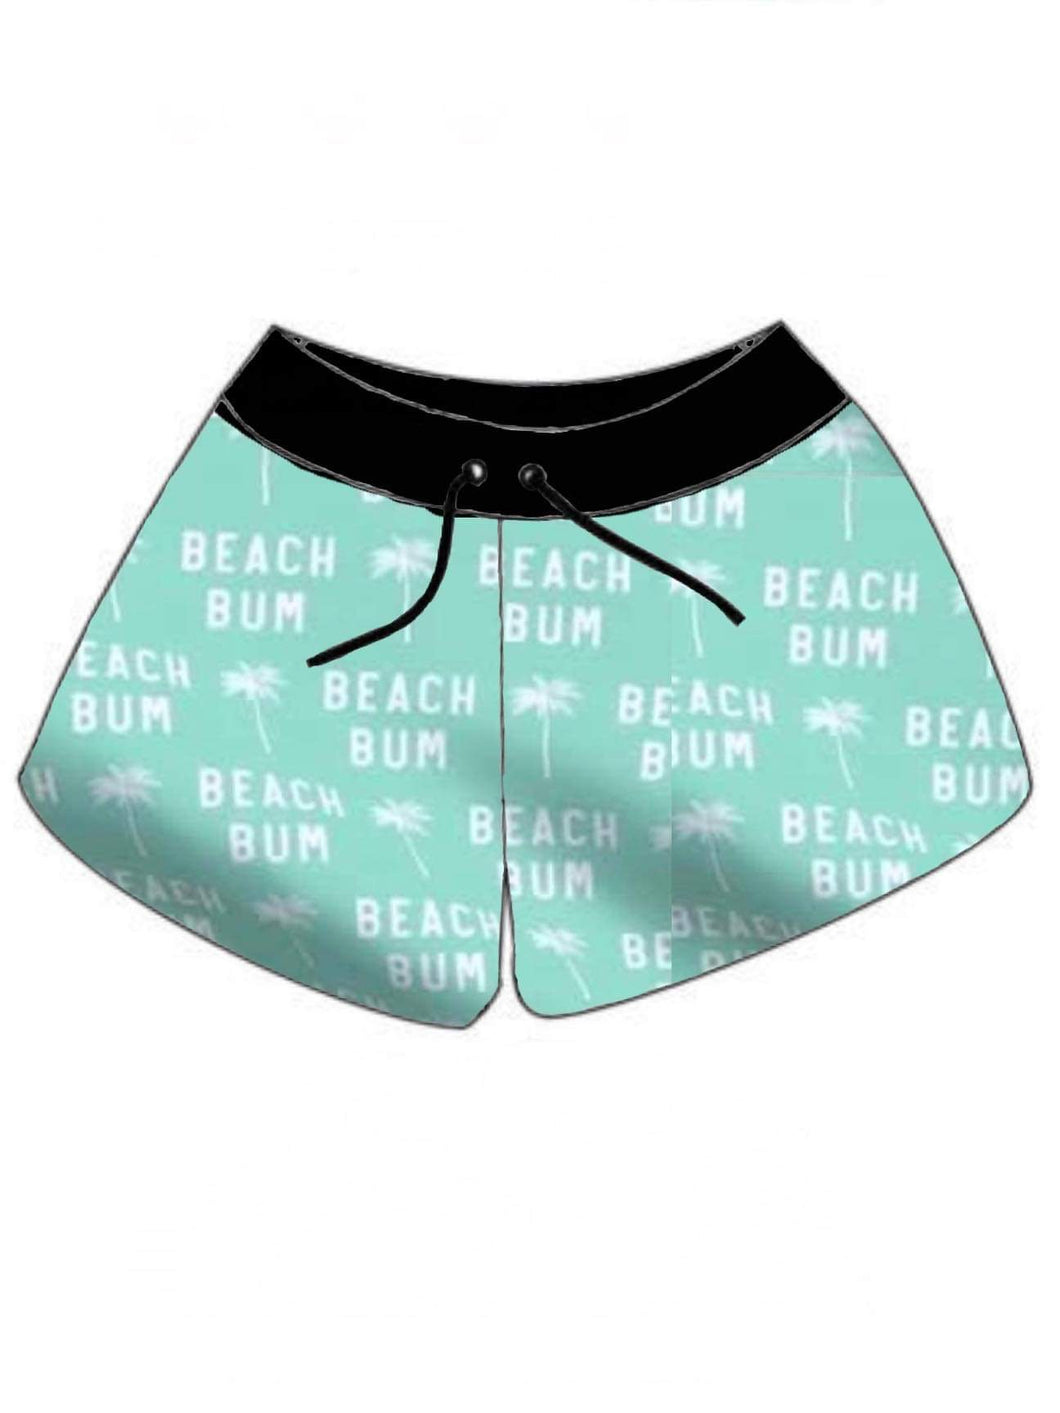 Beach Bum Swim